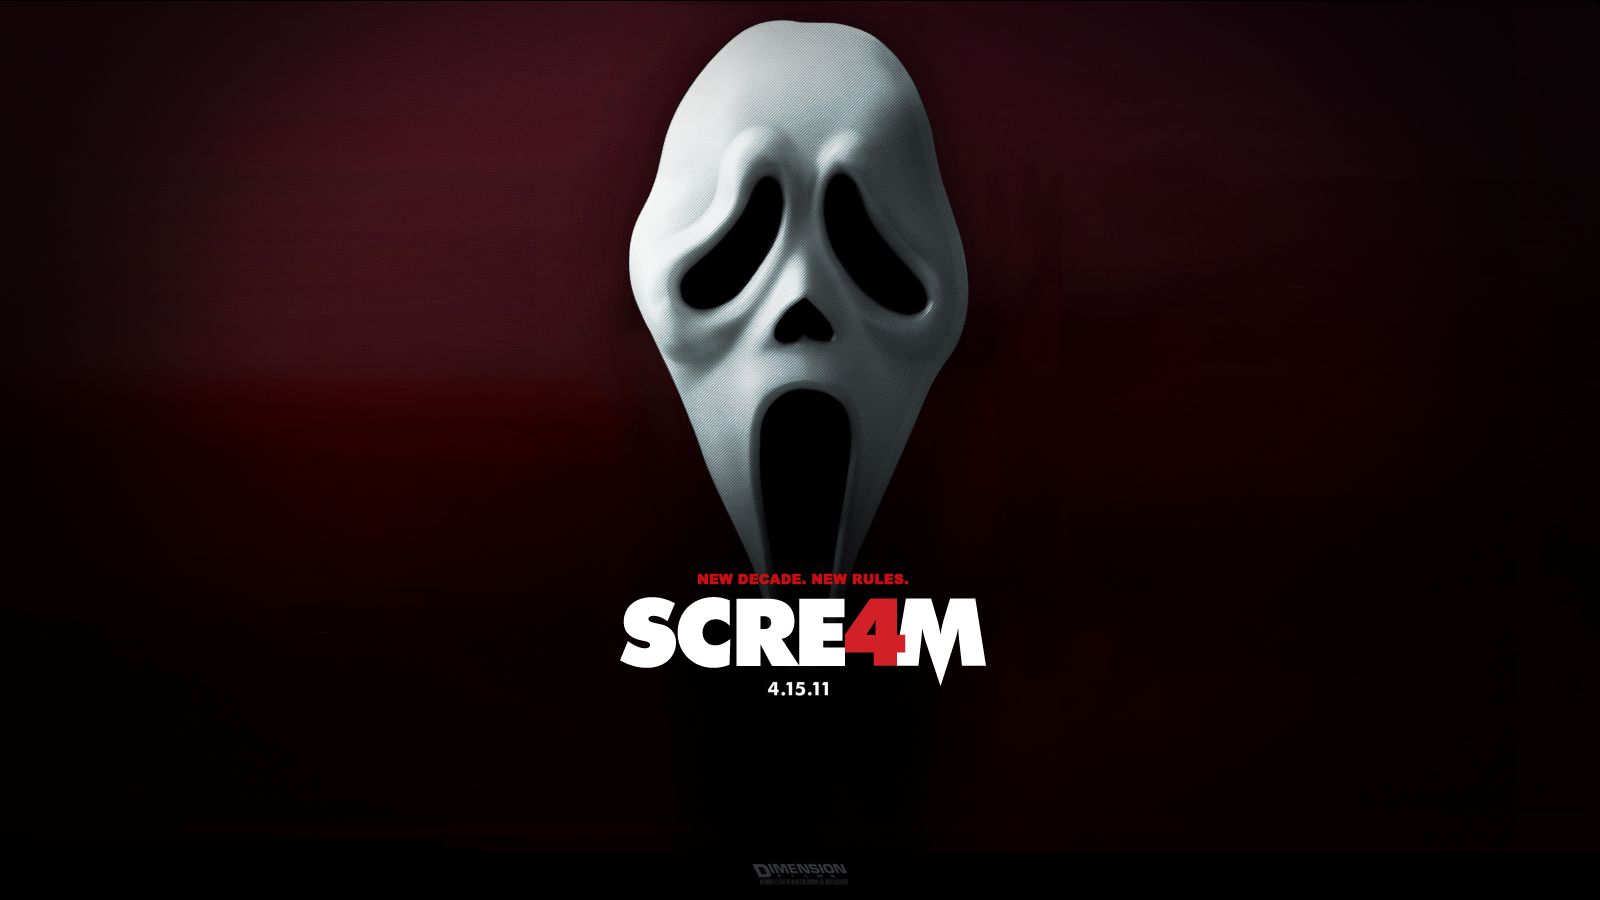 Scream movie wallpapers